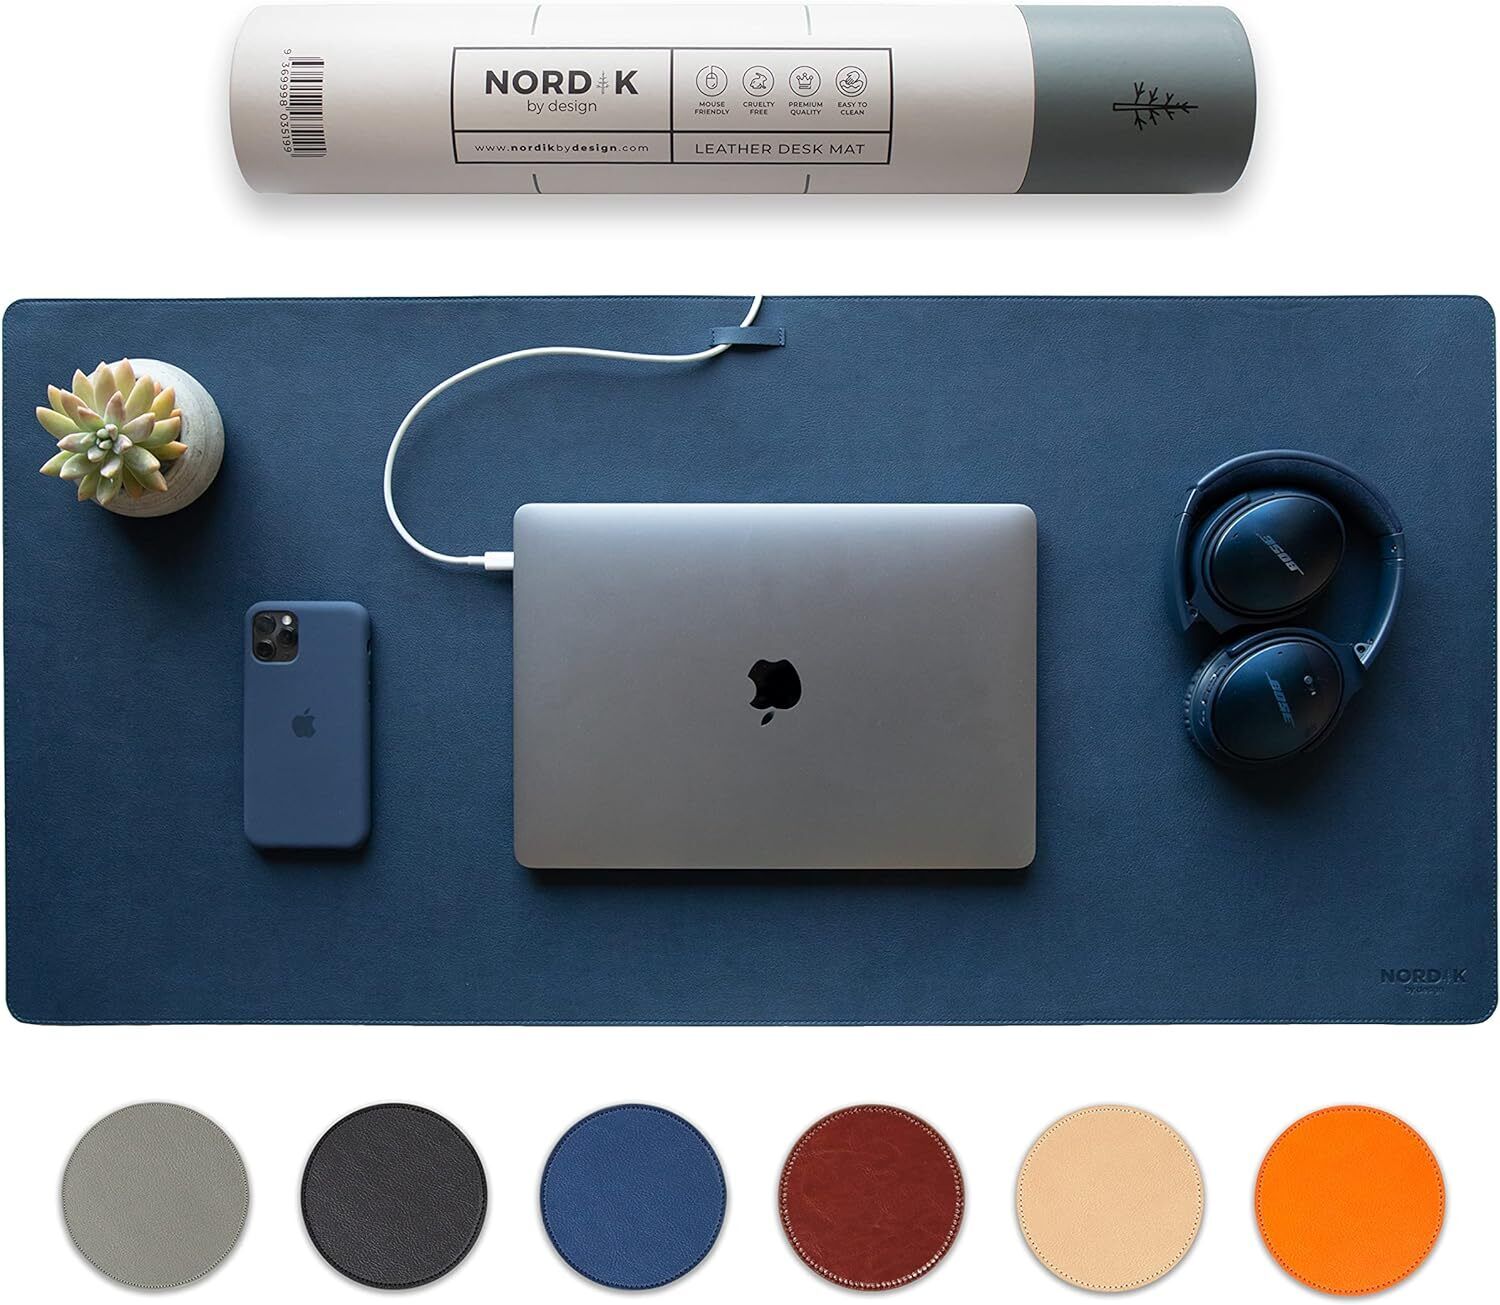 Nordik Leather Desk Mat Cable Organizer Midnight Blue Premium Extended Mouse Mat